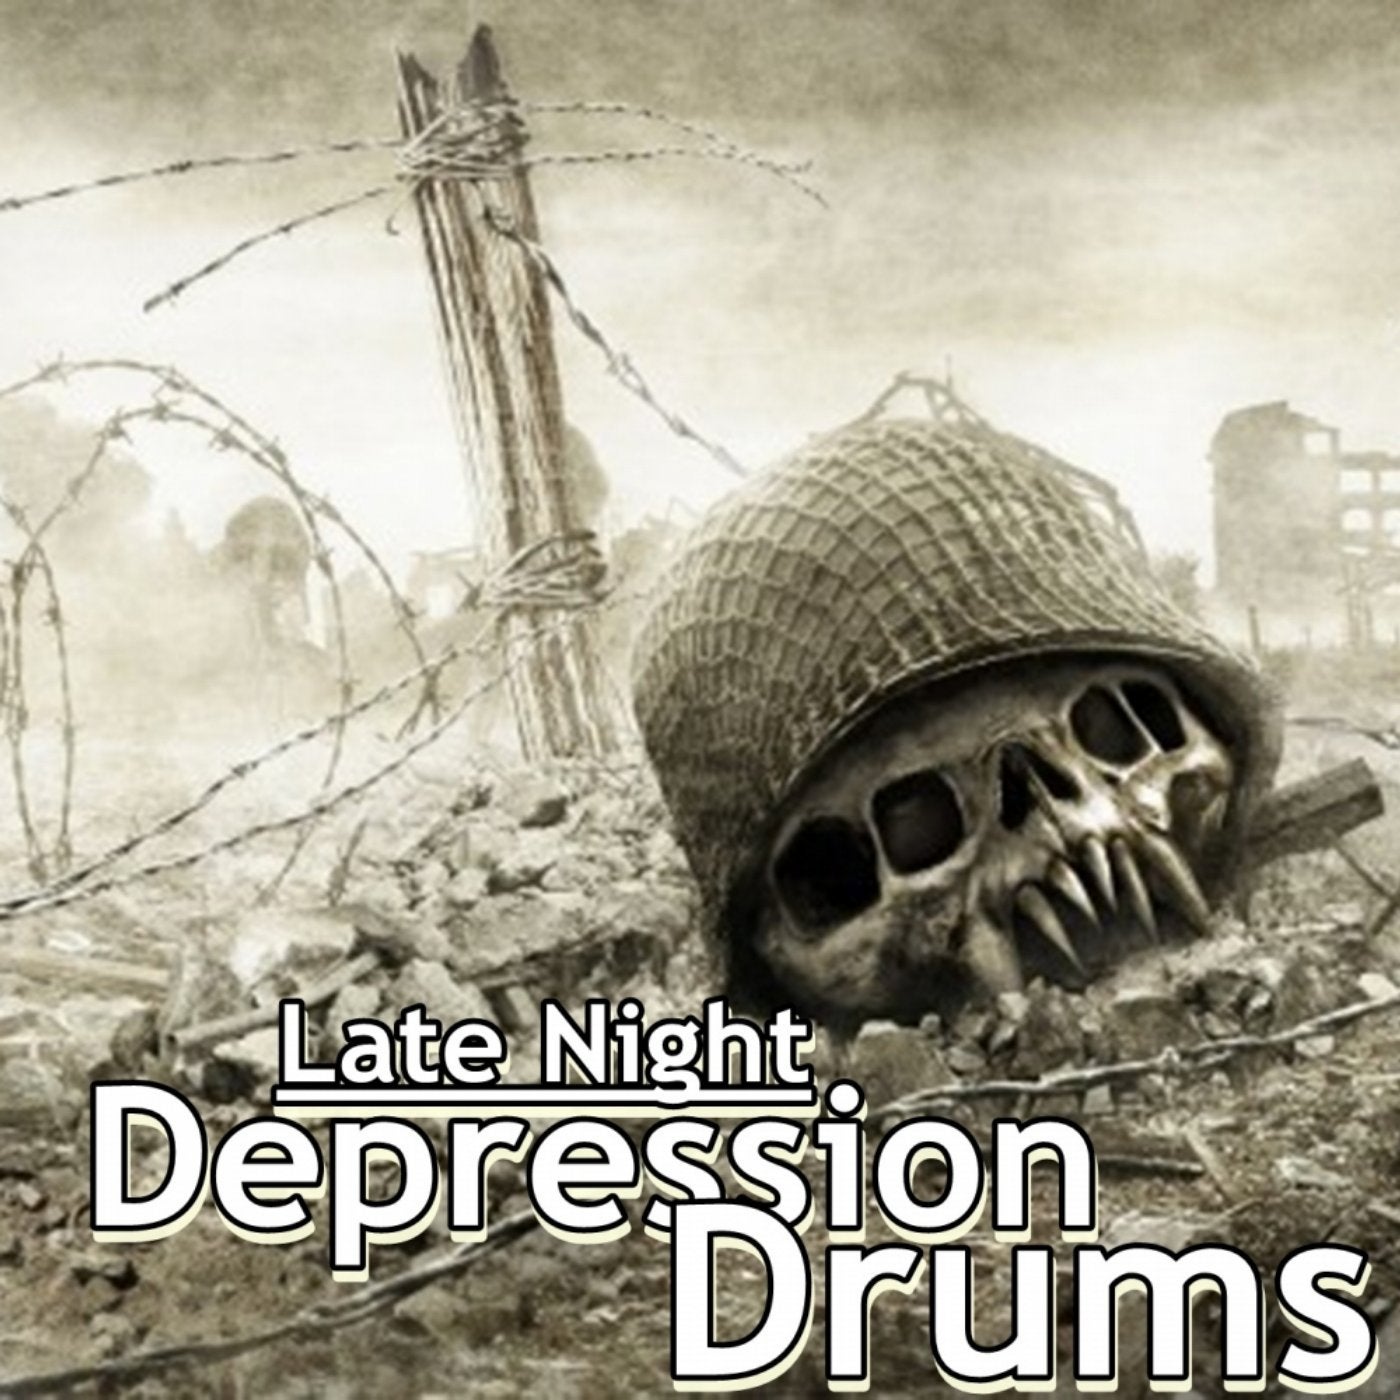 Late Night Depression Drums, Vol. 1